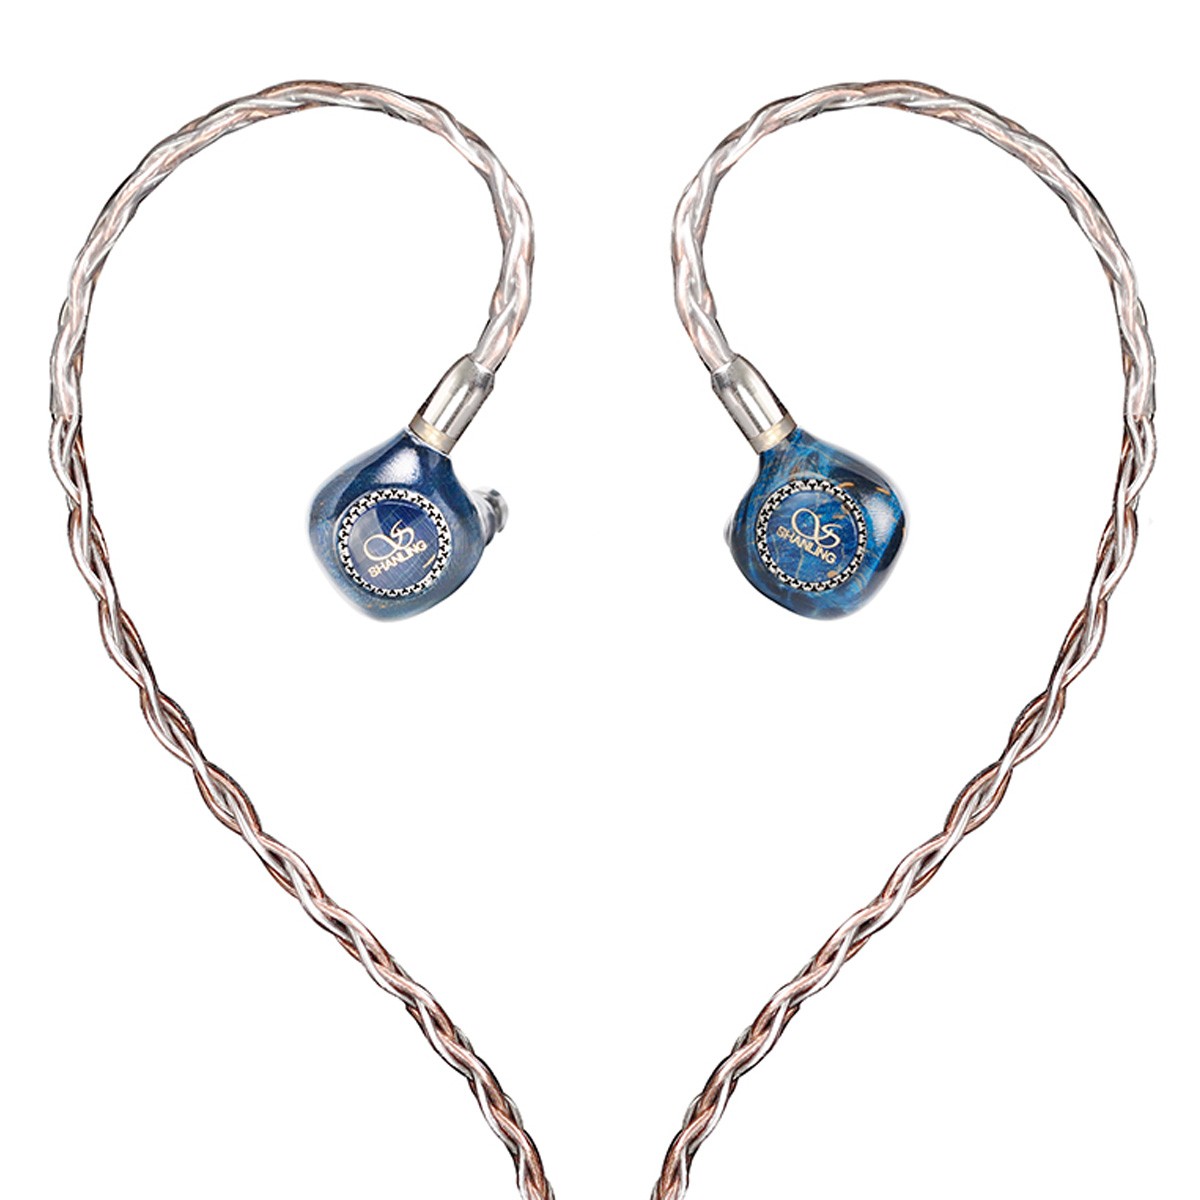 Shanling MG600 In-Ear Monitors (Blue)